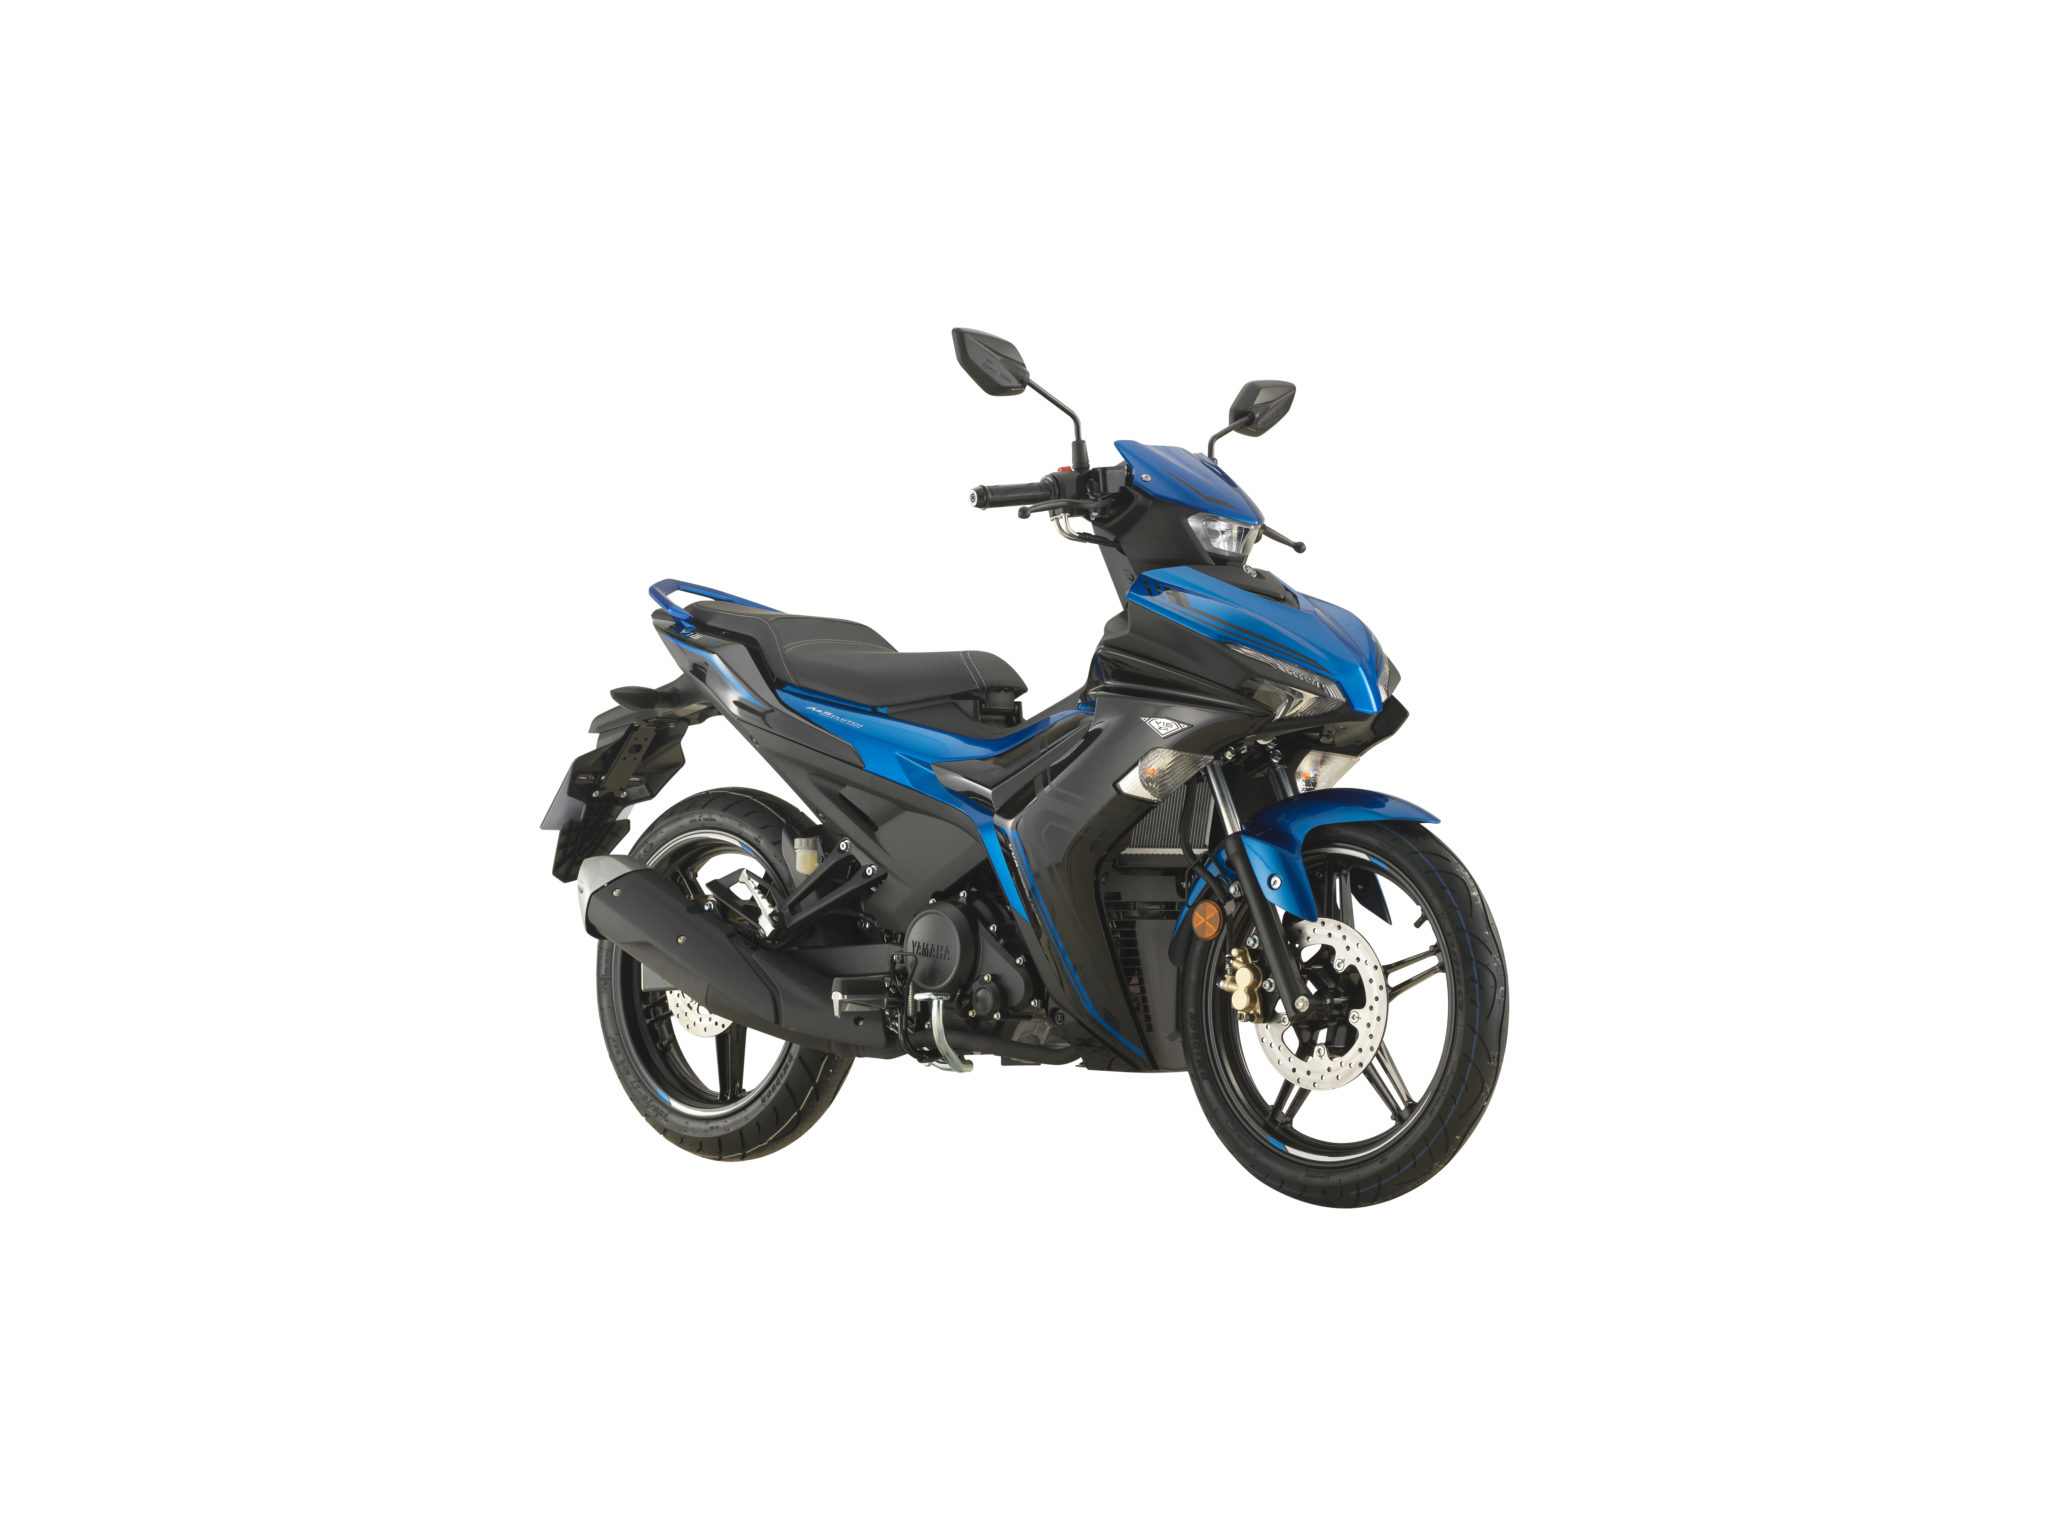 Yamaha y16 price malaysia